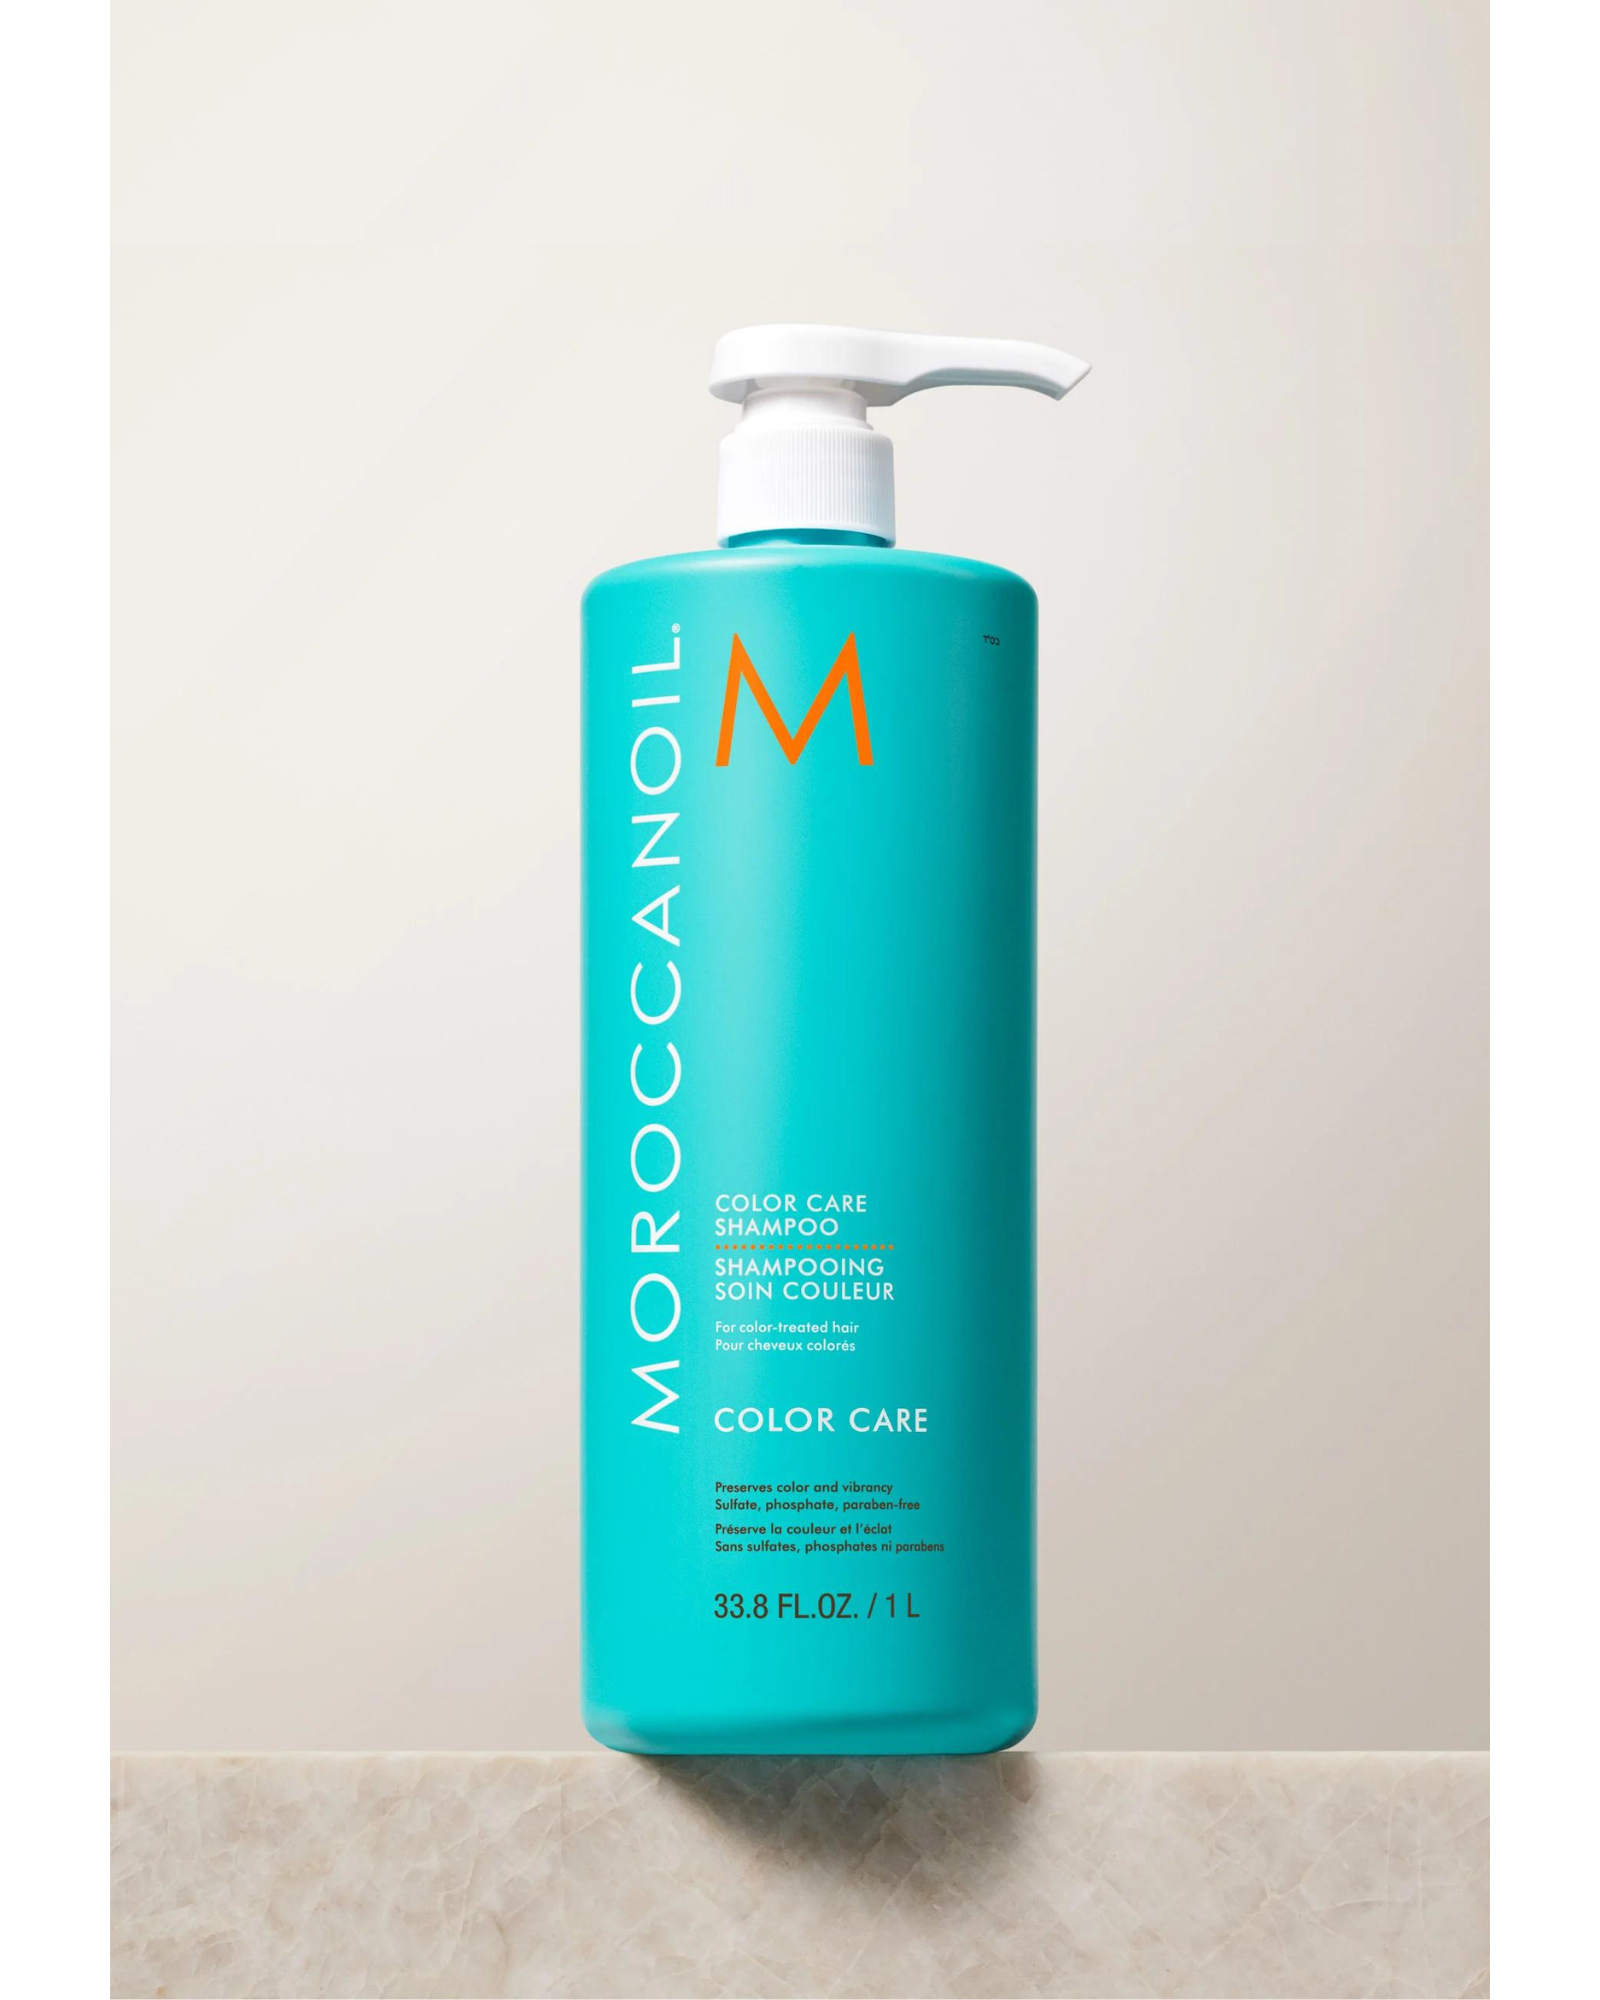 Shampoo for color-treated hair (MoroccanOil Color Care Shampoo)